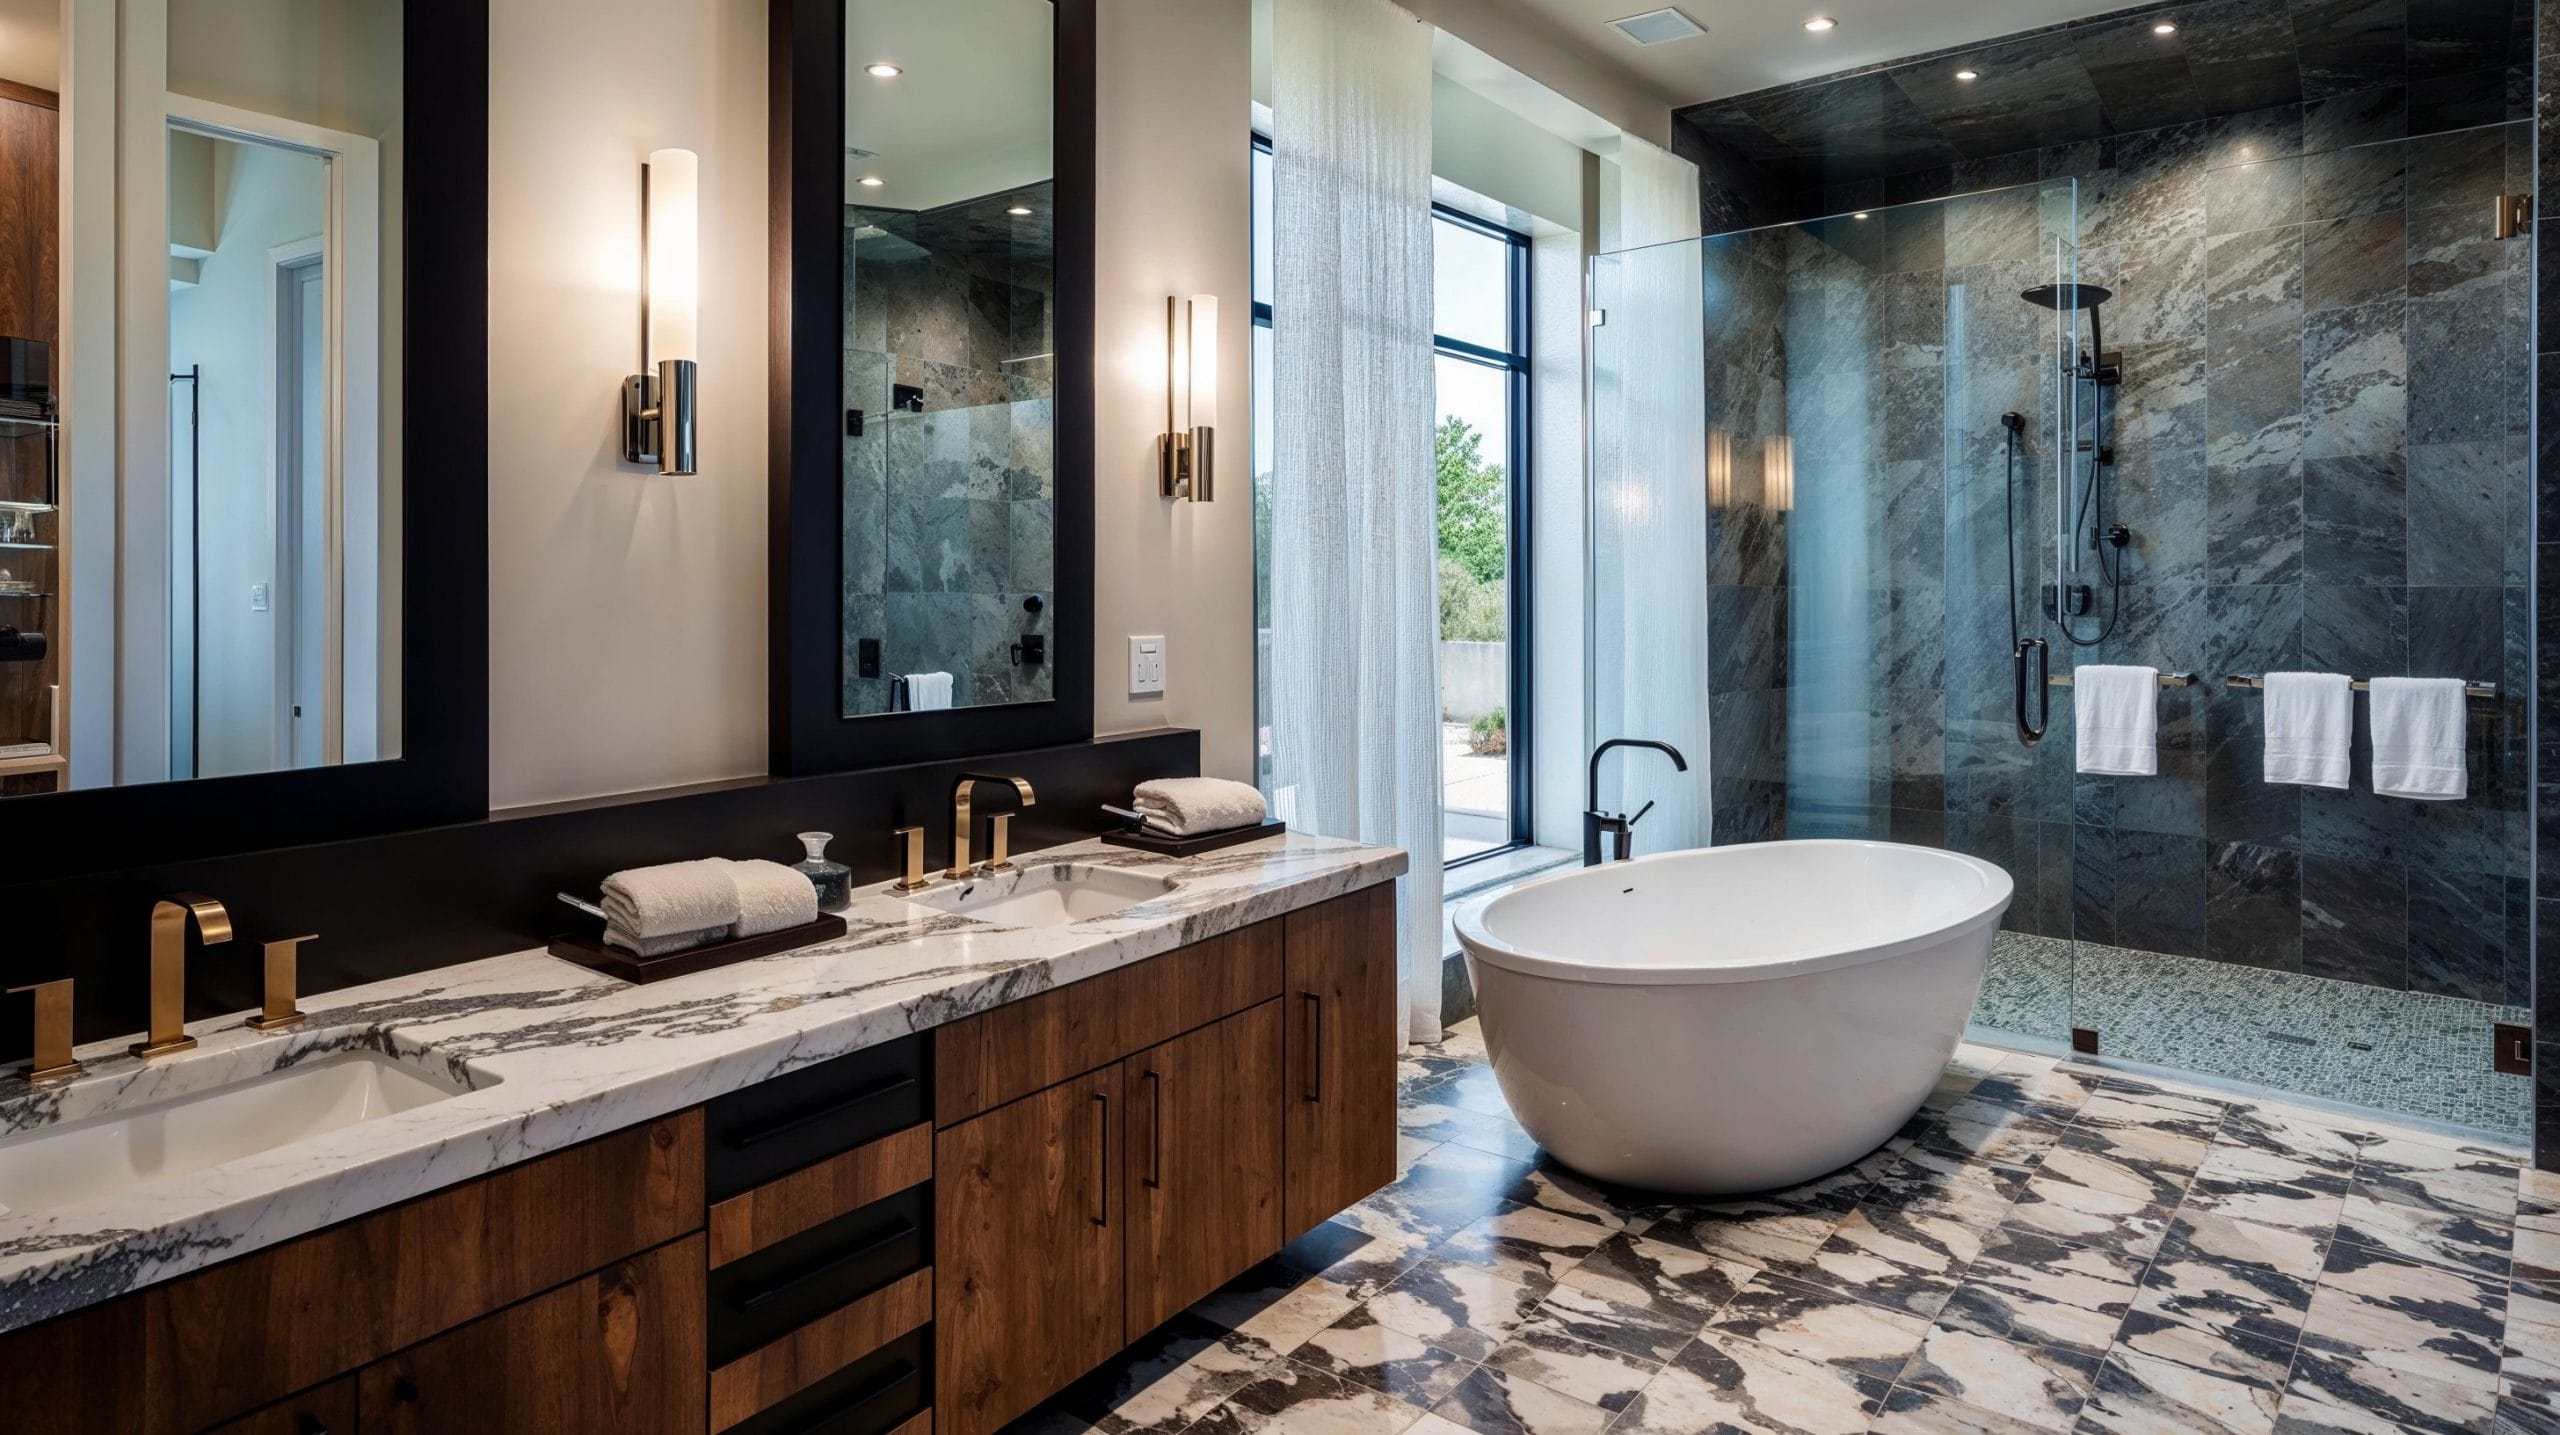 Before & After: Luxury Master Bathroom Online Interior Design